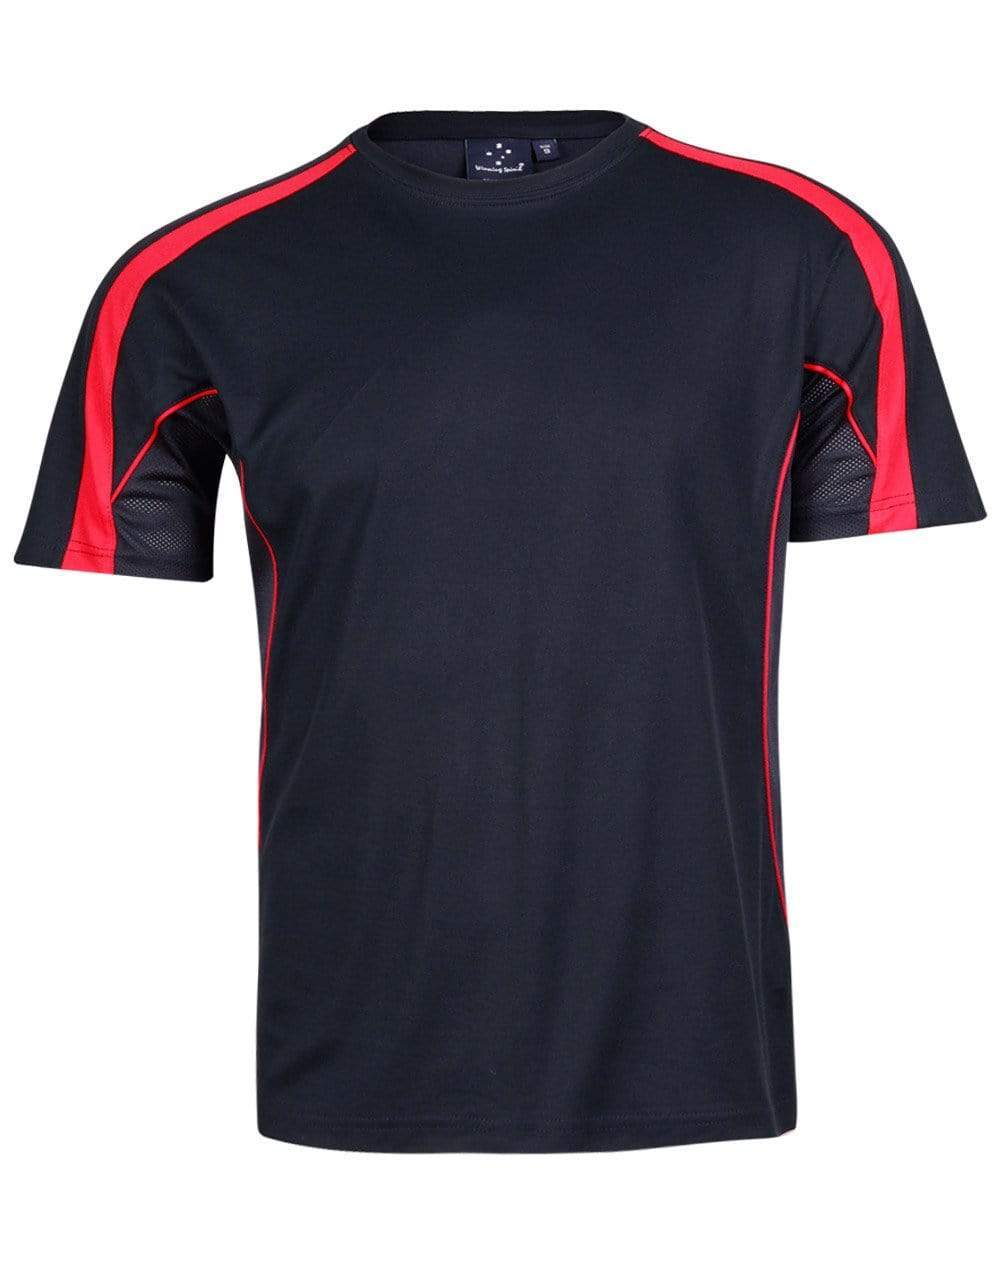 Winning Spirit Casual Wear Navy/Red / 8 Legend Tee Shirt Ladies Ts54